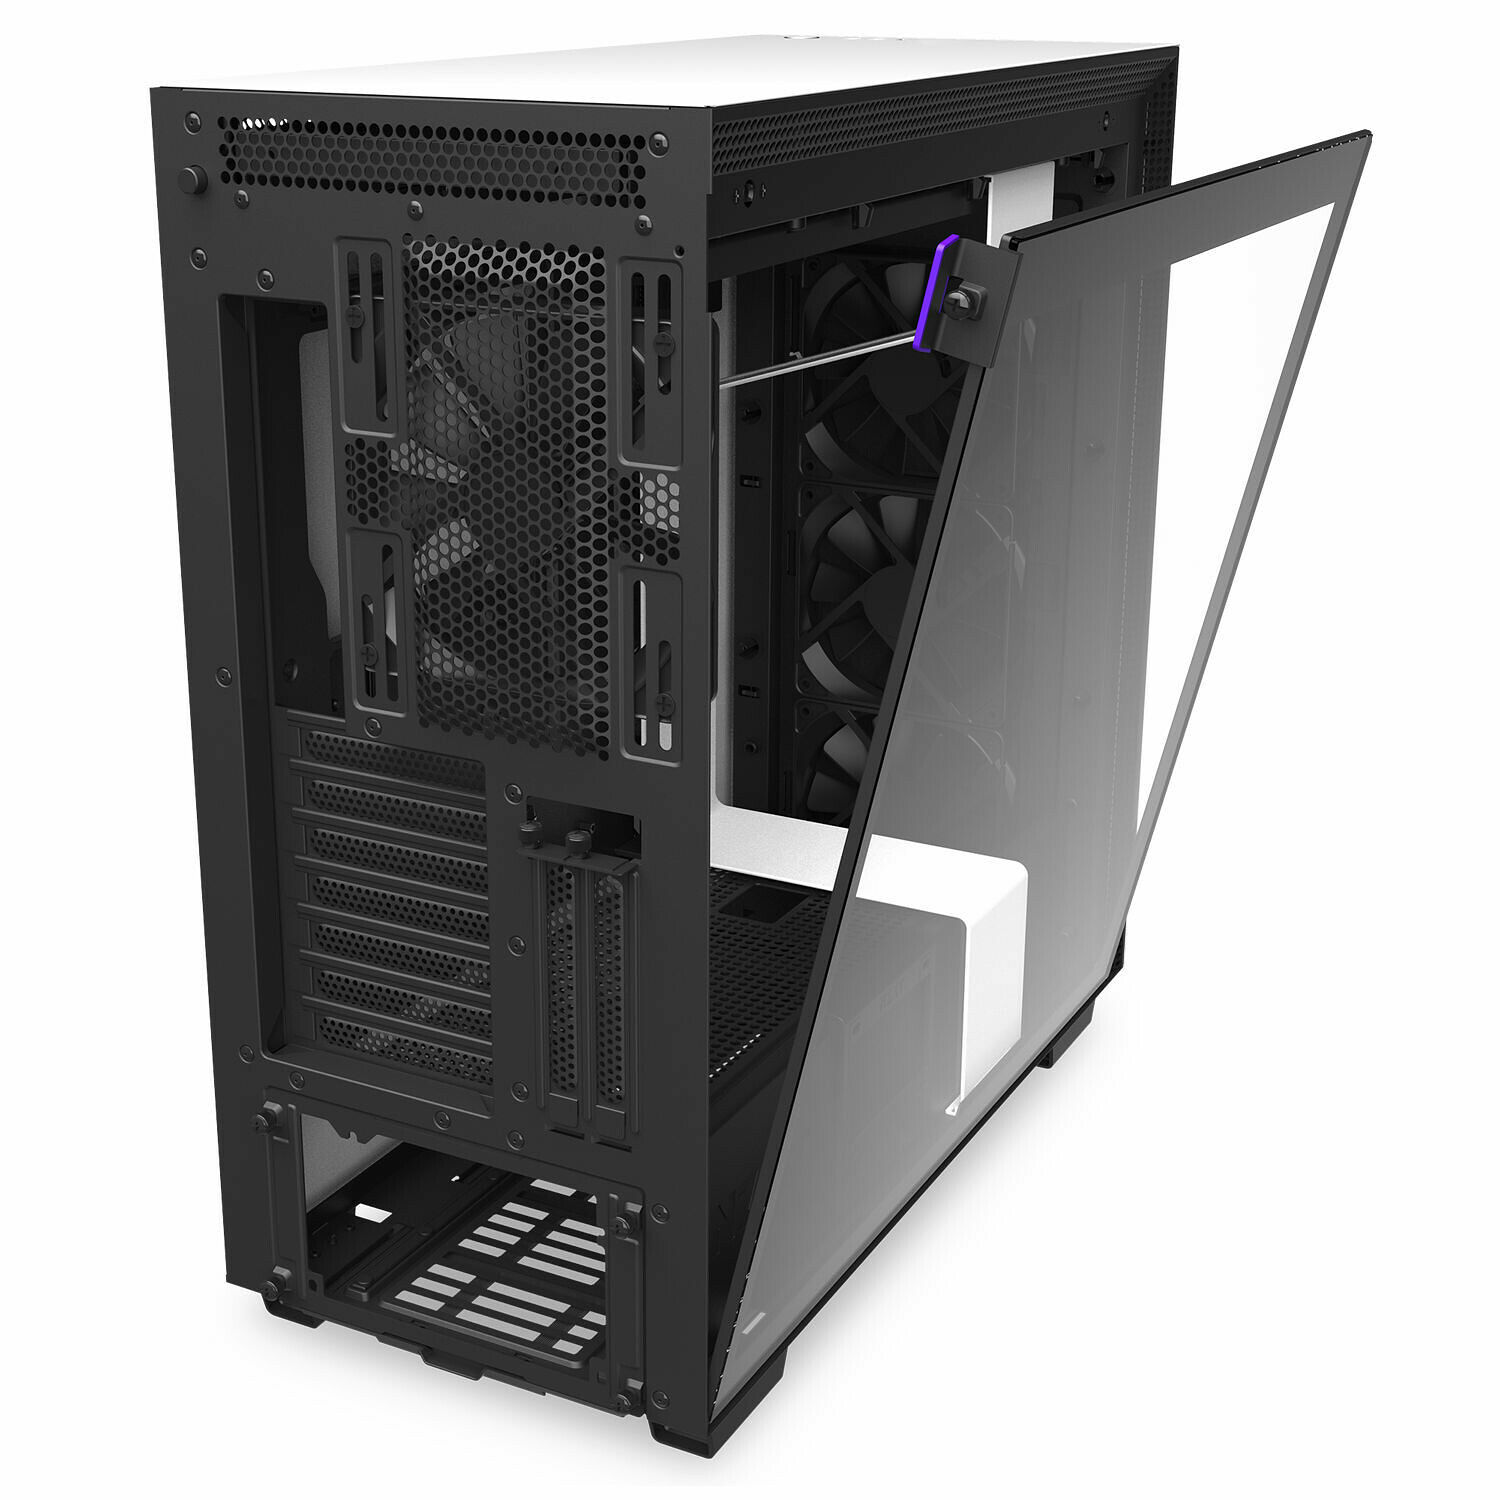 Boitier PC NZXT : boitier PC gamer Phantom noir, blanc, éclairage LED